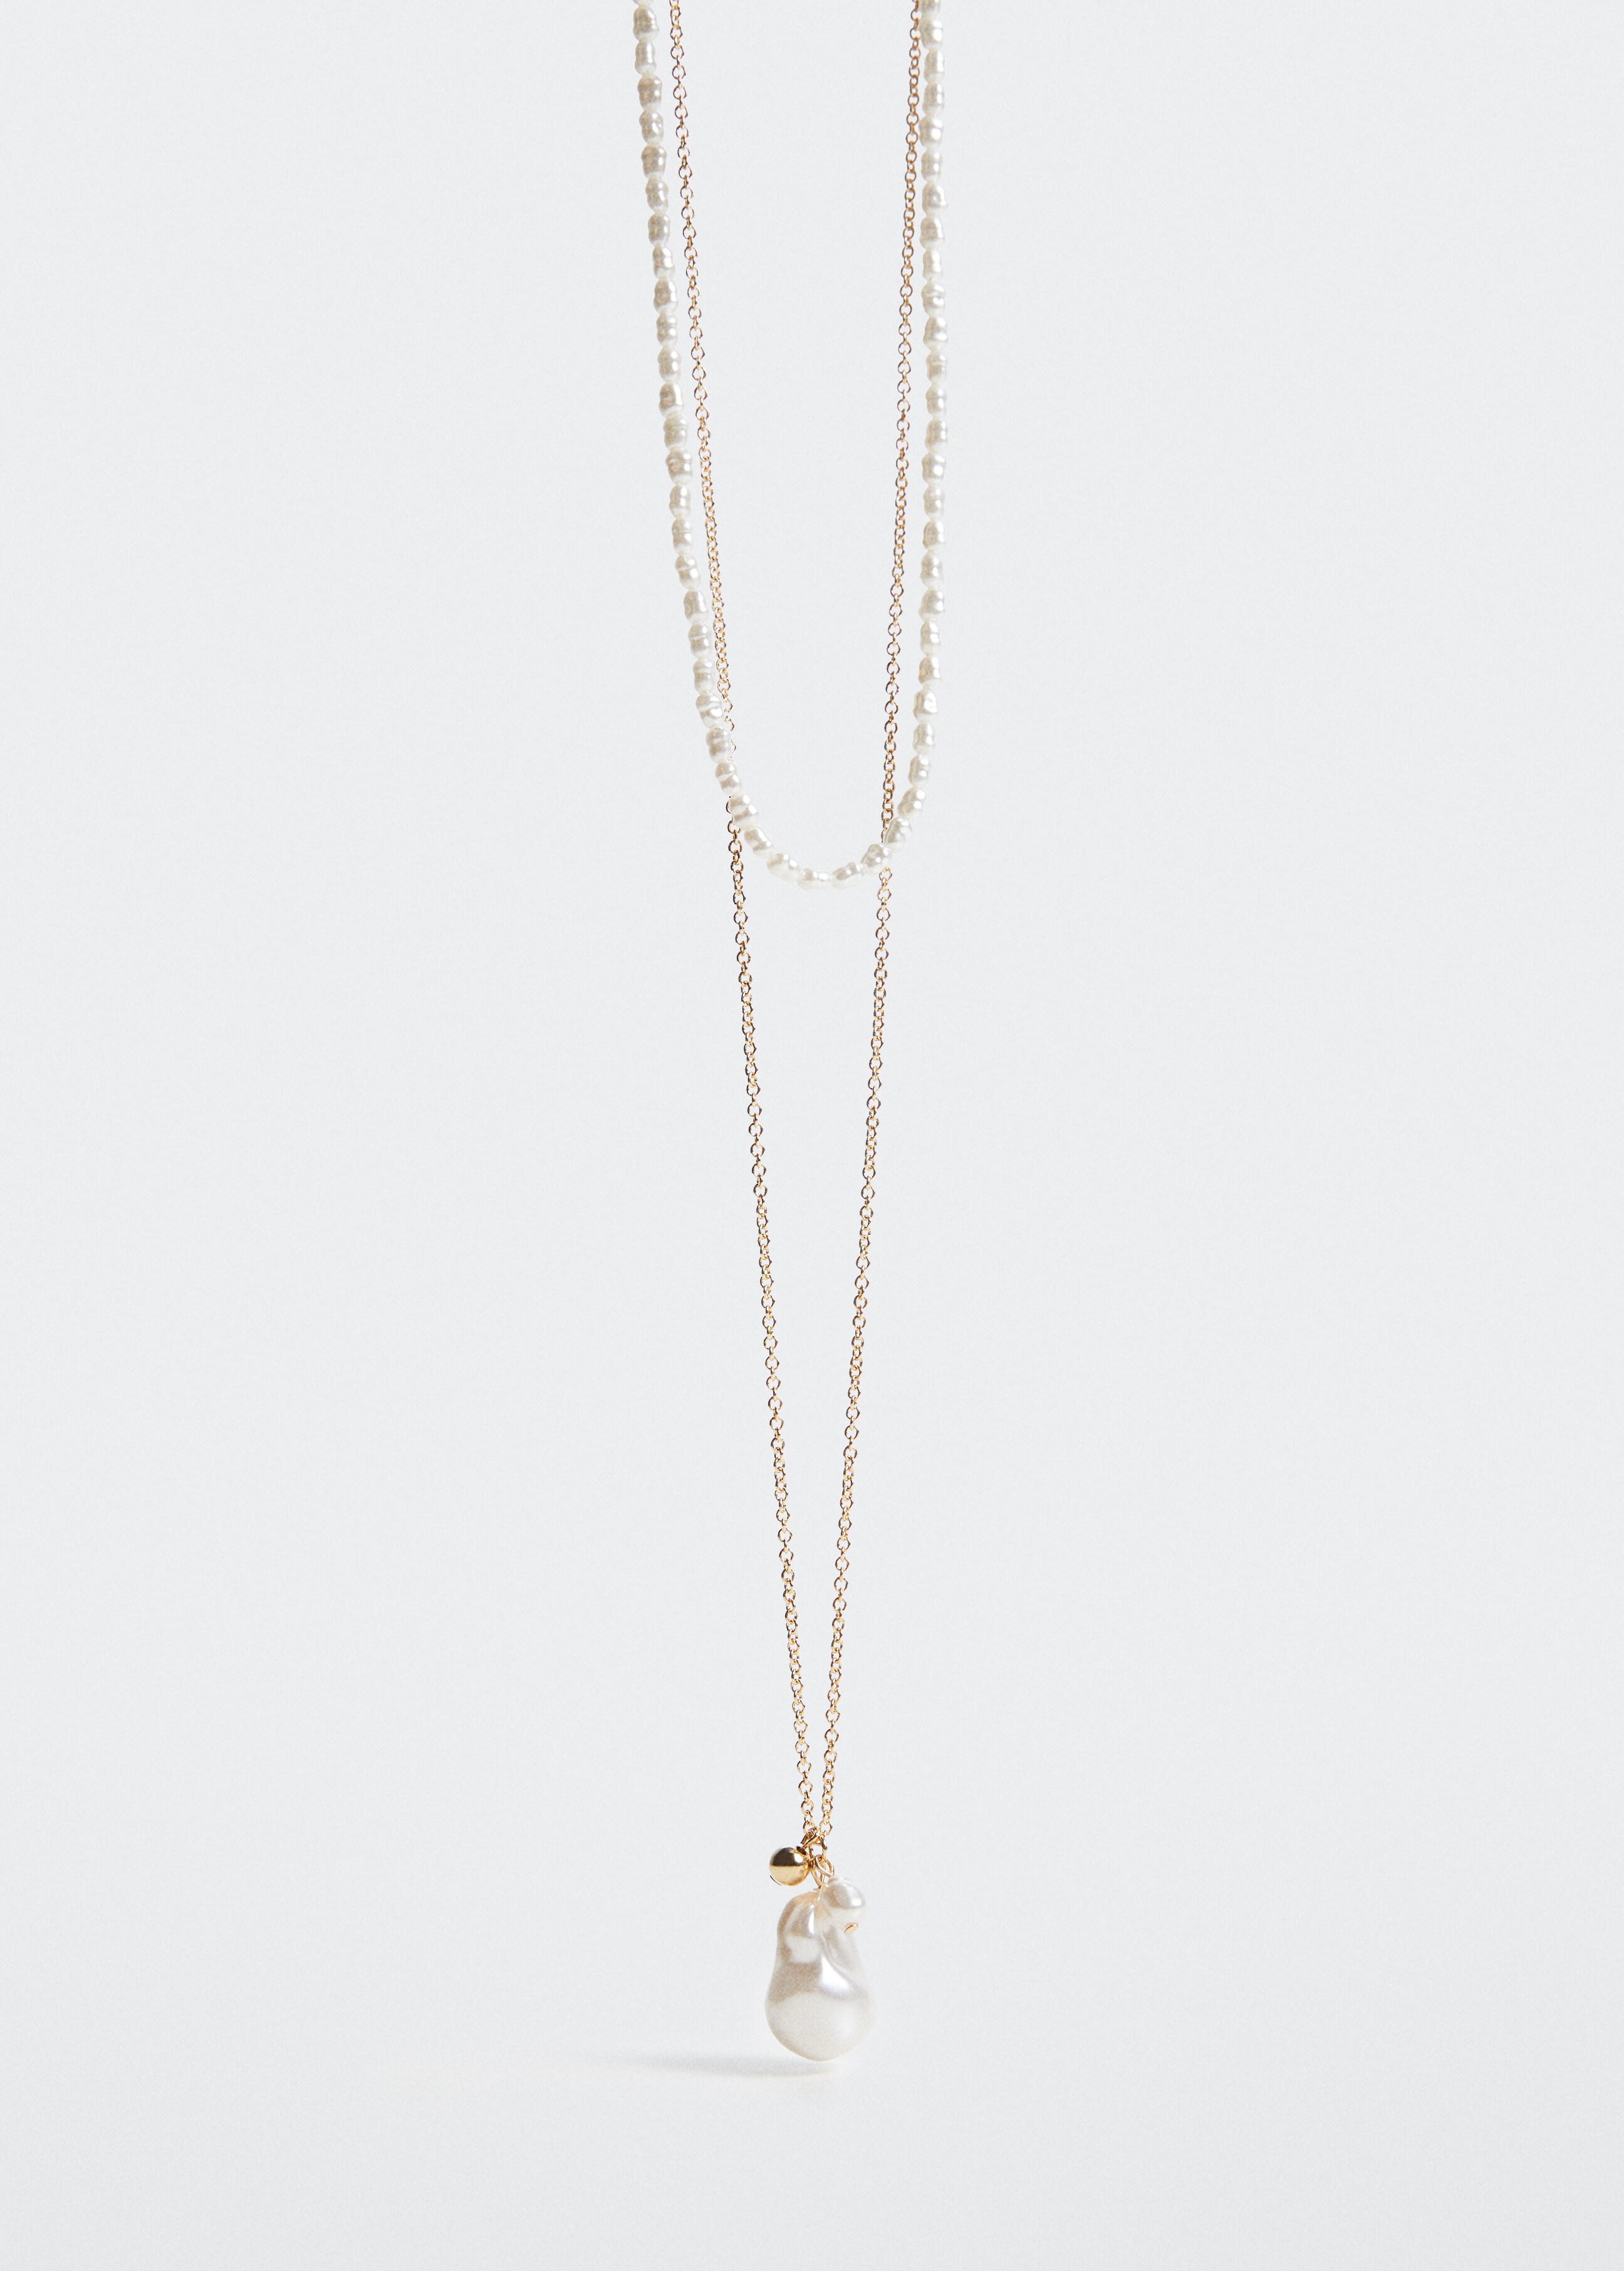 Double pearl chain necklace - Medium plane